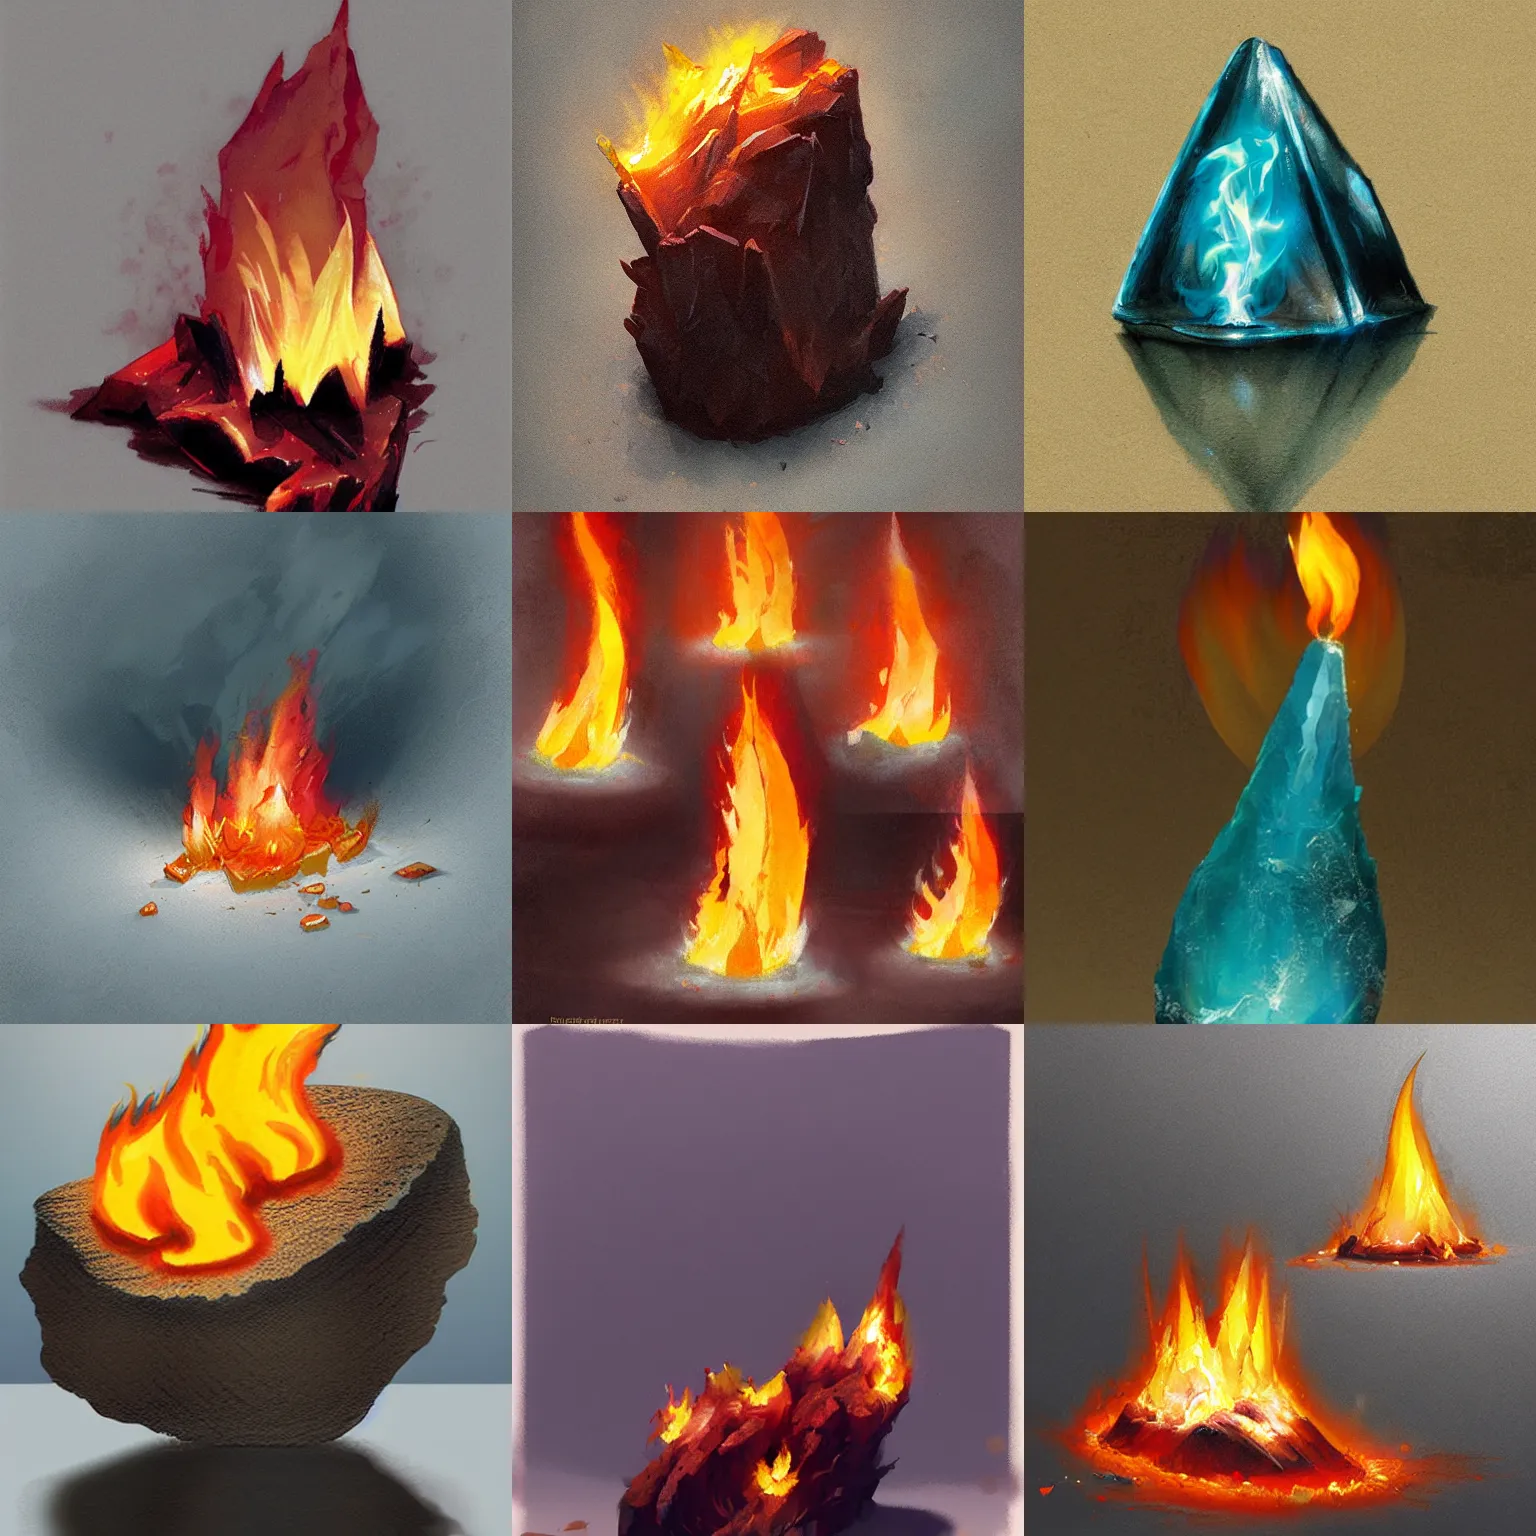 Prompt: crystal shaped like flame, flat bottom, painted by greg rutkowski